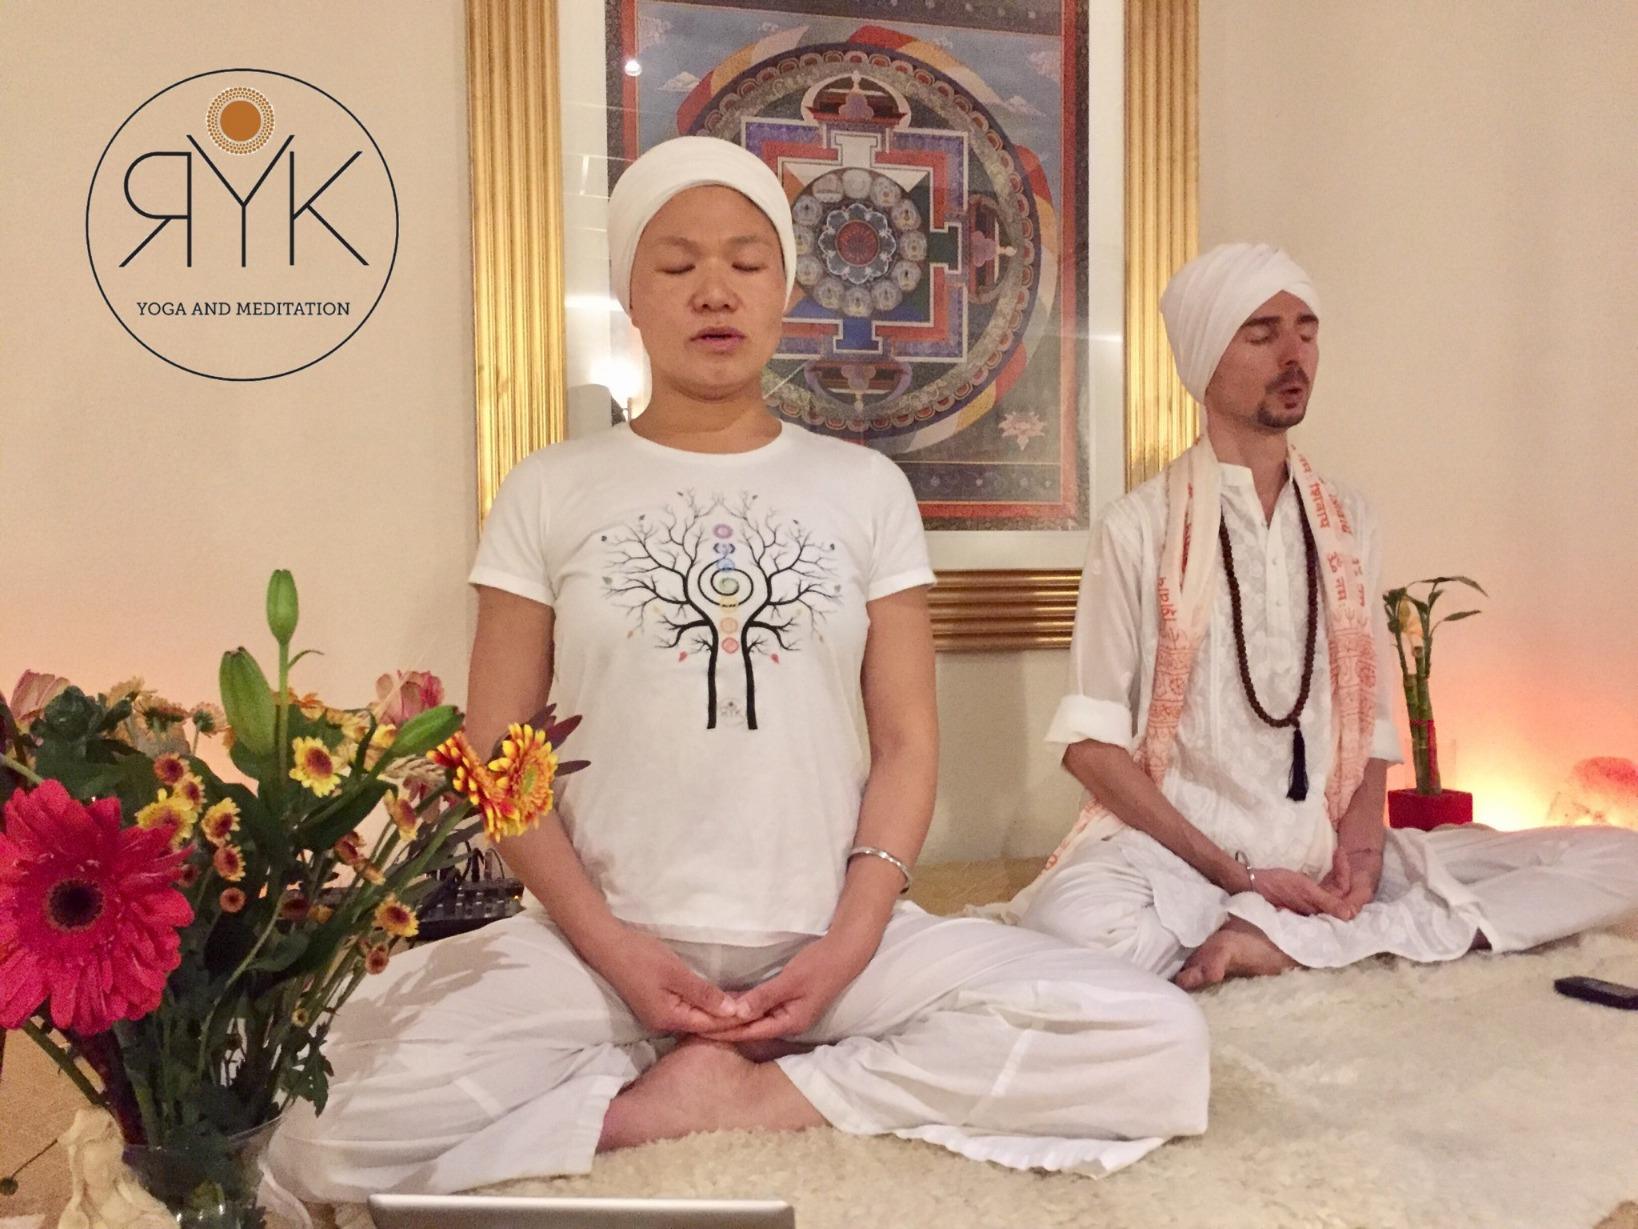 RYK Yoga And Meditation Center Las Vegas